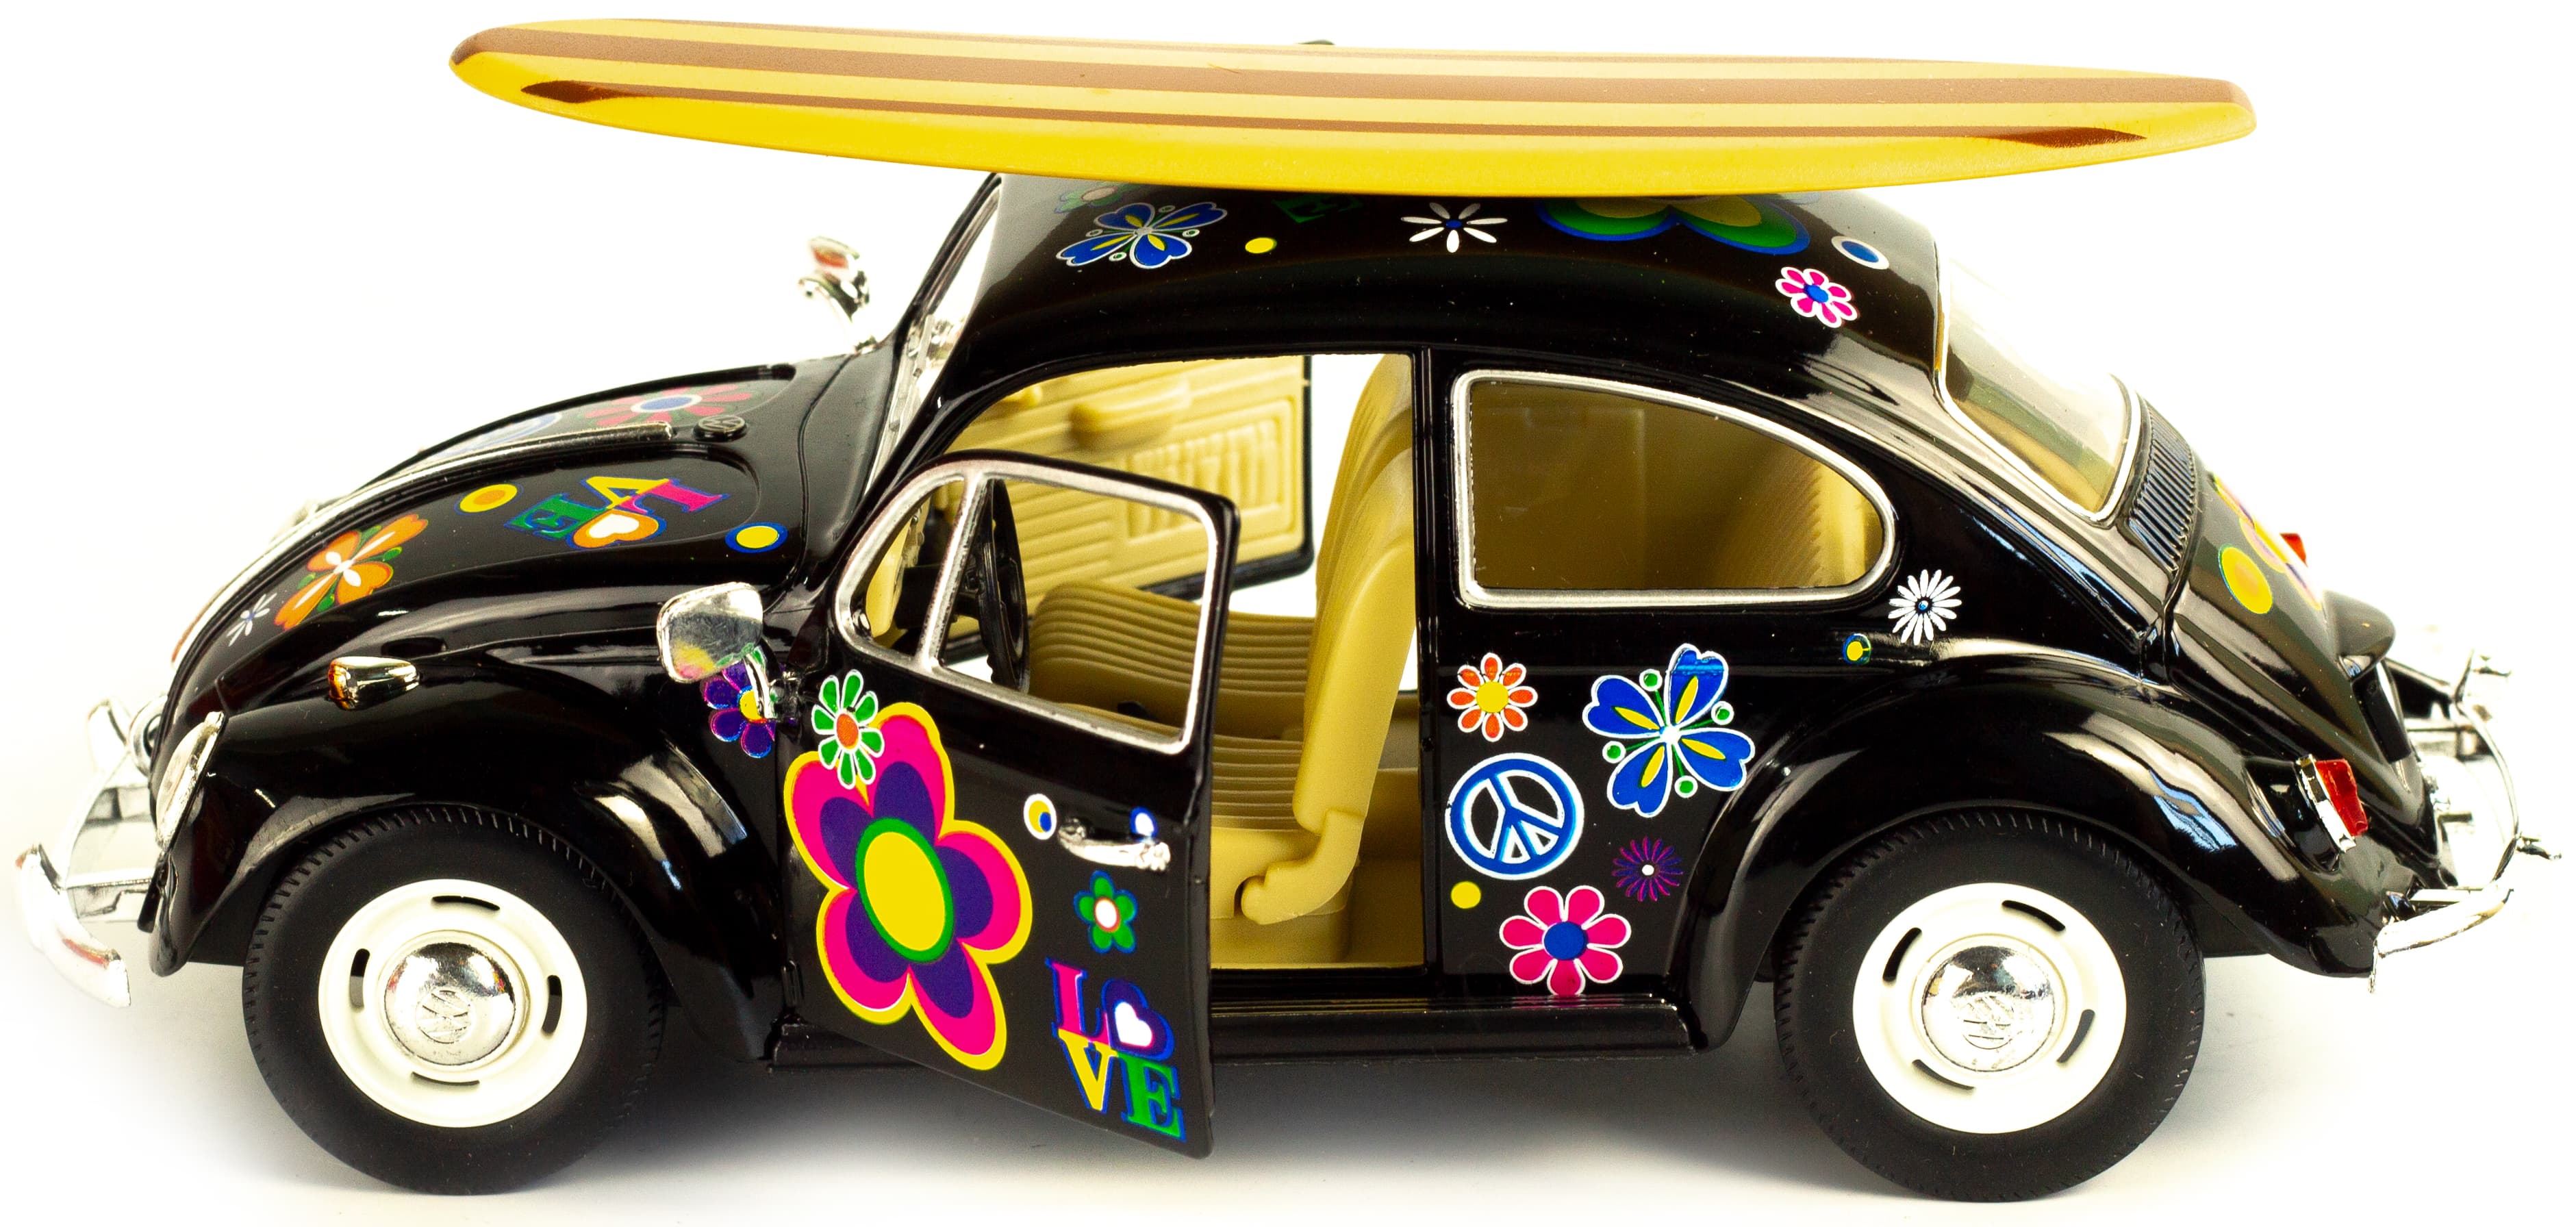 Машинка металлическая Kinsmart 1:24 «1967 Volkswagen Classical Beetle w/ wooden surfboard» KT7002DFS-1, инерционная / Черная